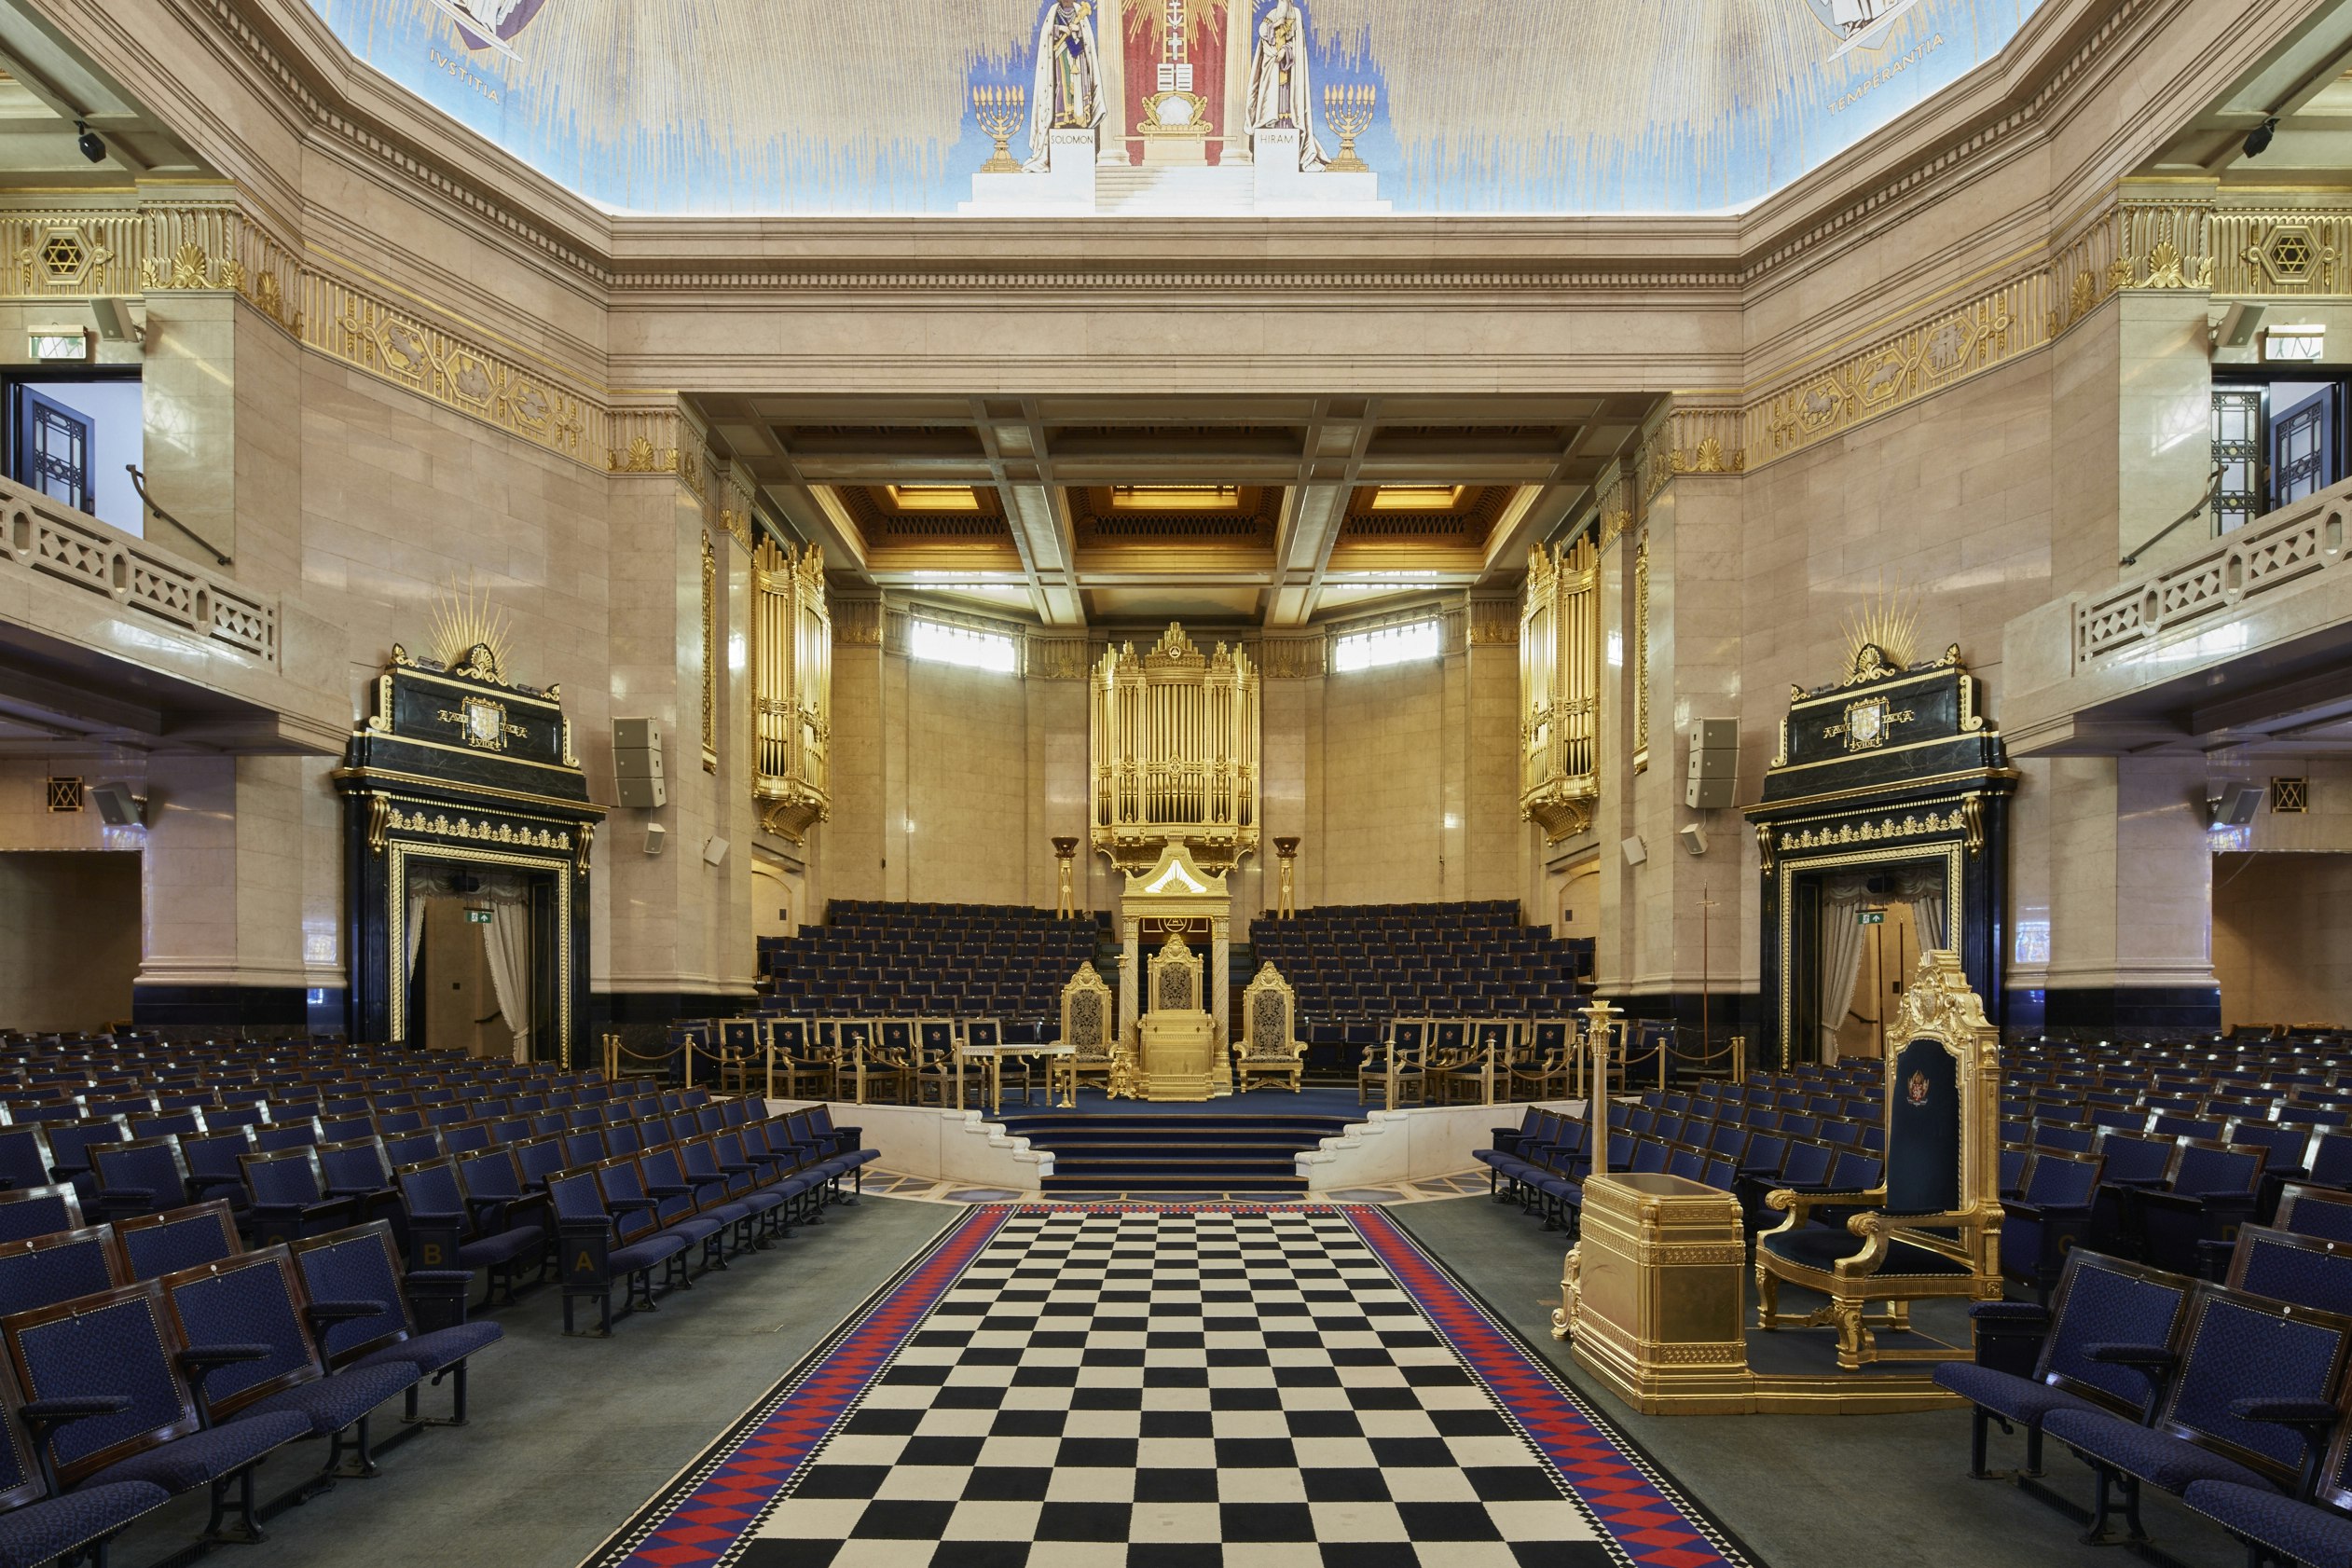 Freemasons' Hall - The Grand Temple image 9